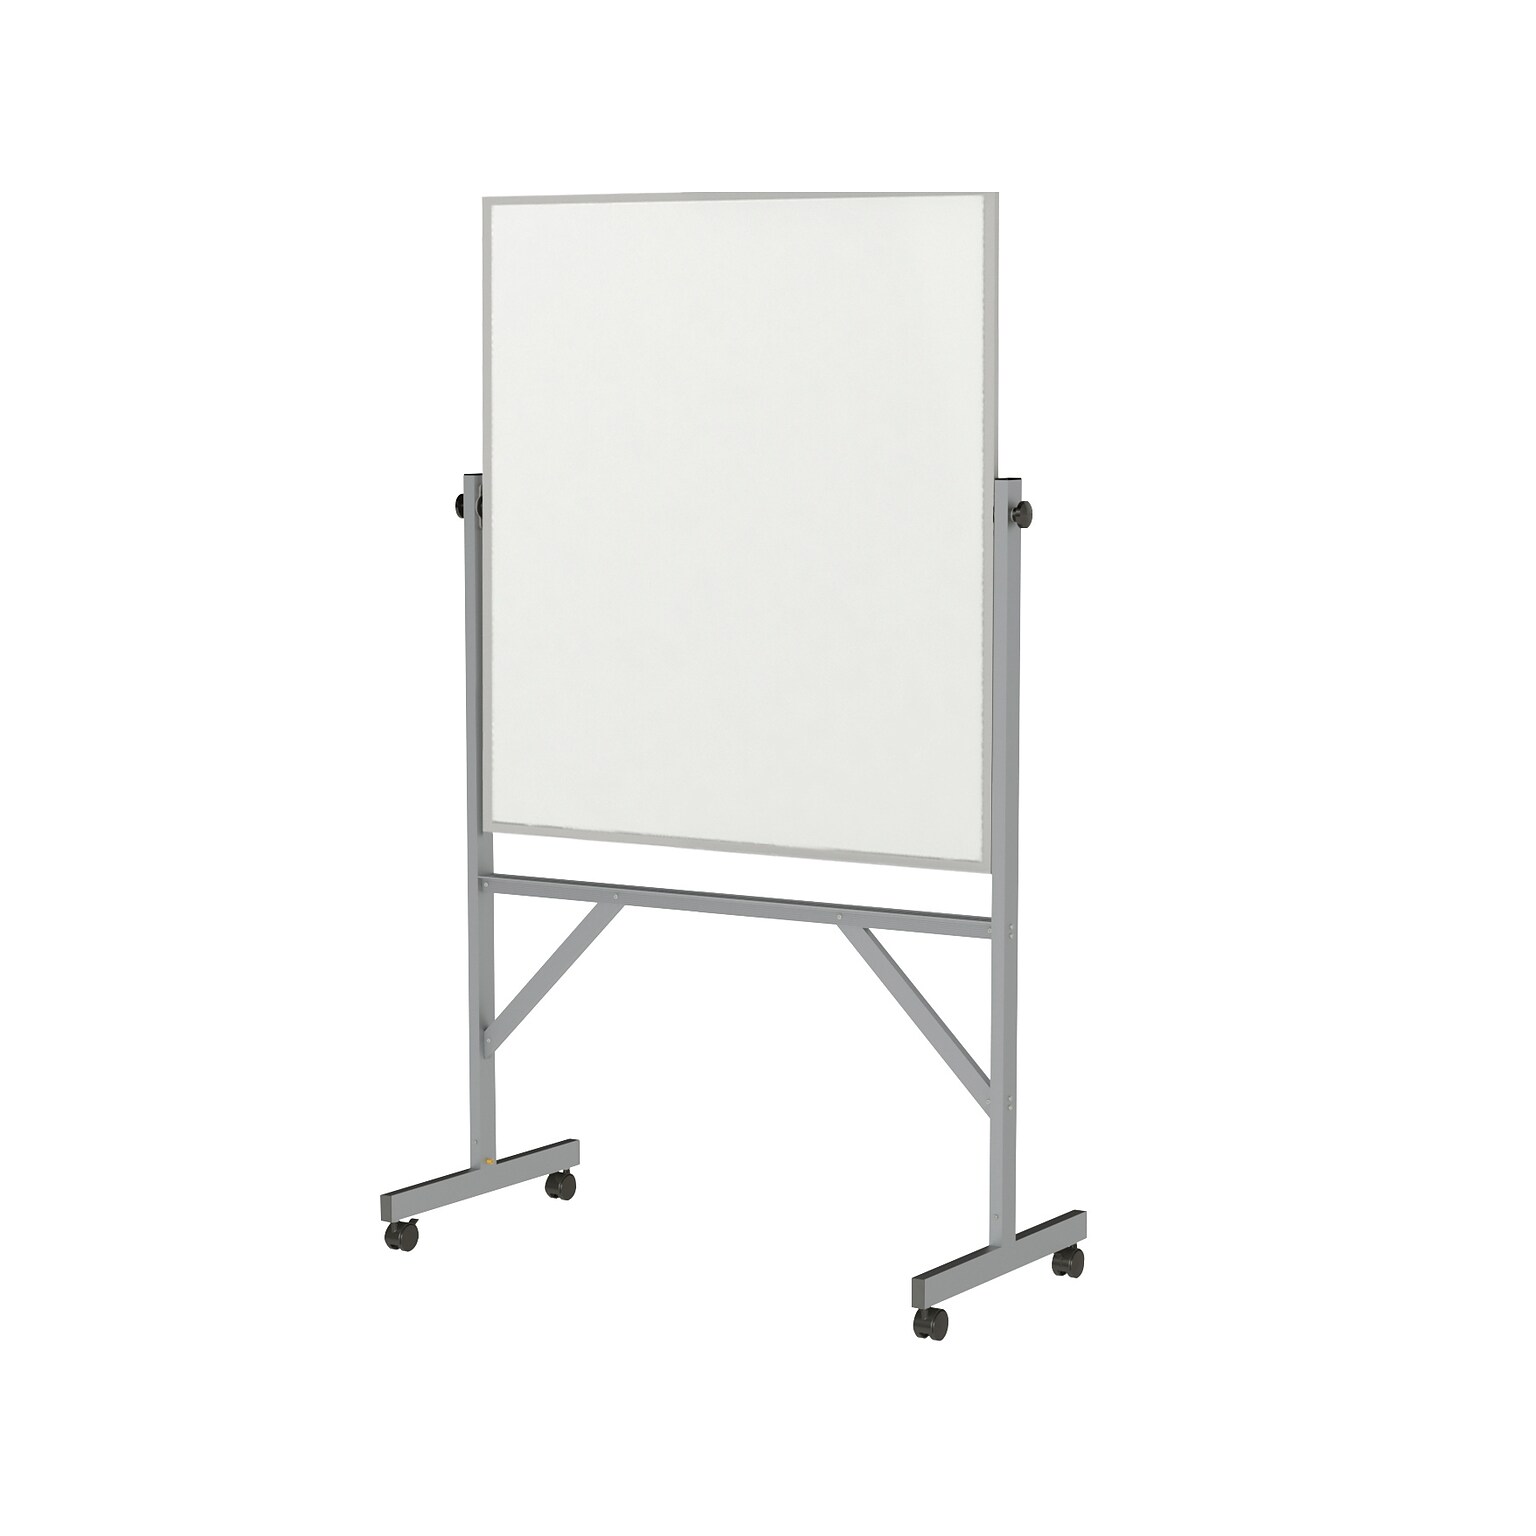 Ghent Porcelain Mobile Dry-Erase Whiteboard, Aluminum Frame, 4 x 3 (ARM1M143)